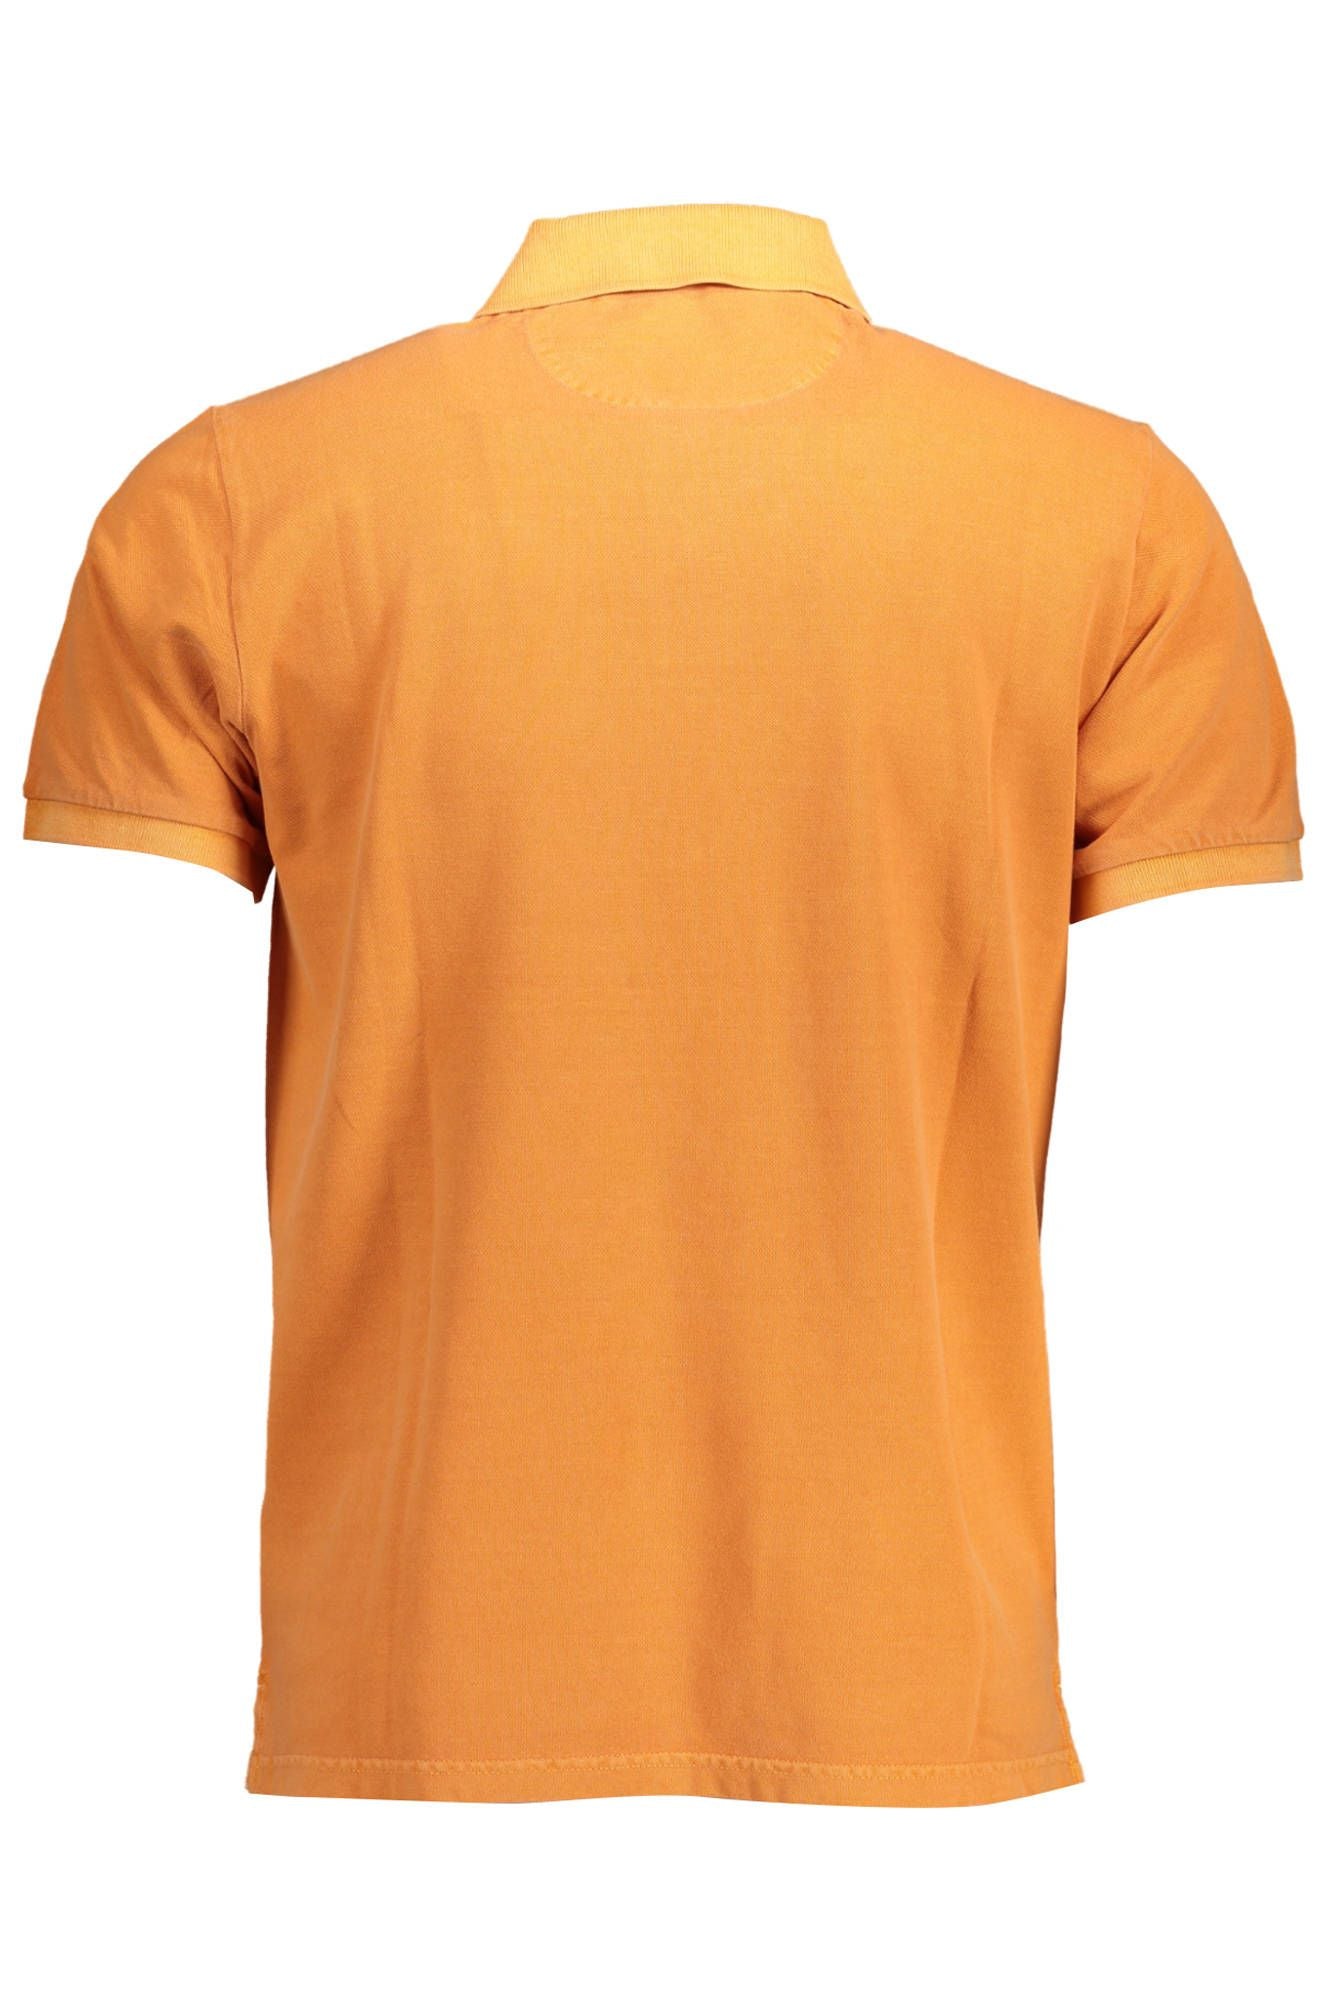 Elegant Short-Sleeved Orange Polo Shirt